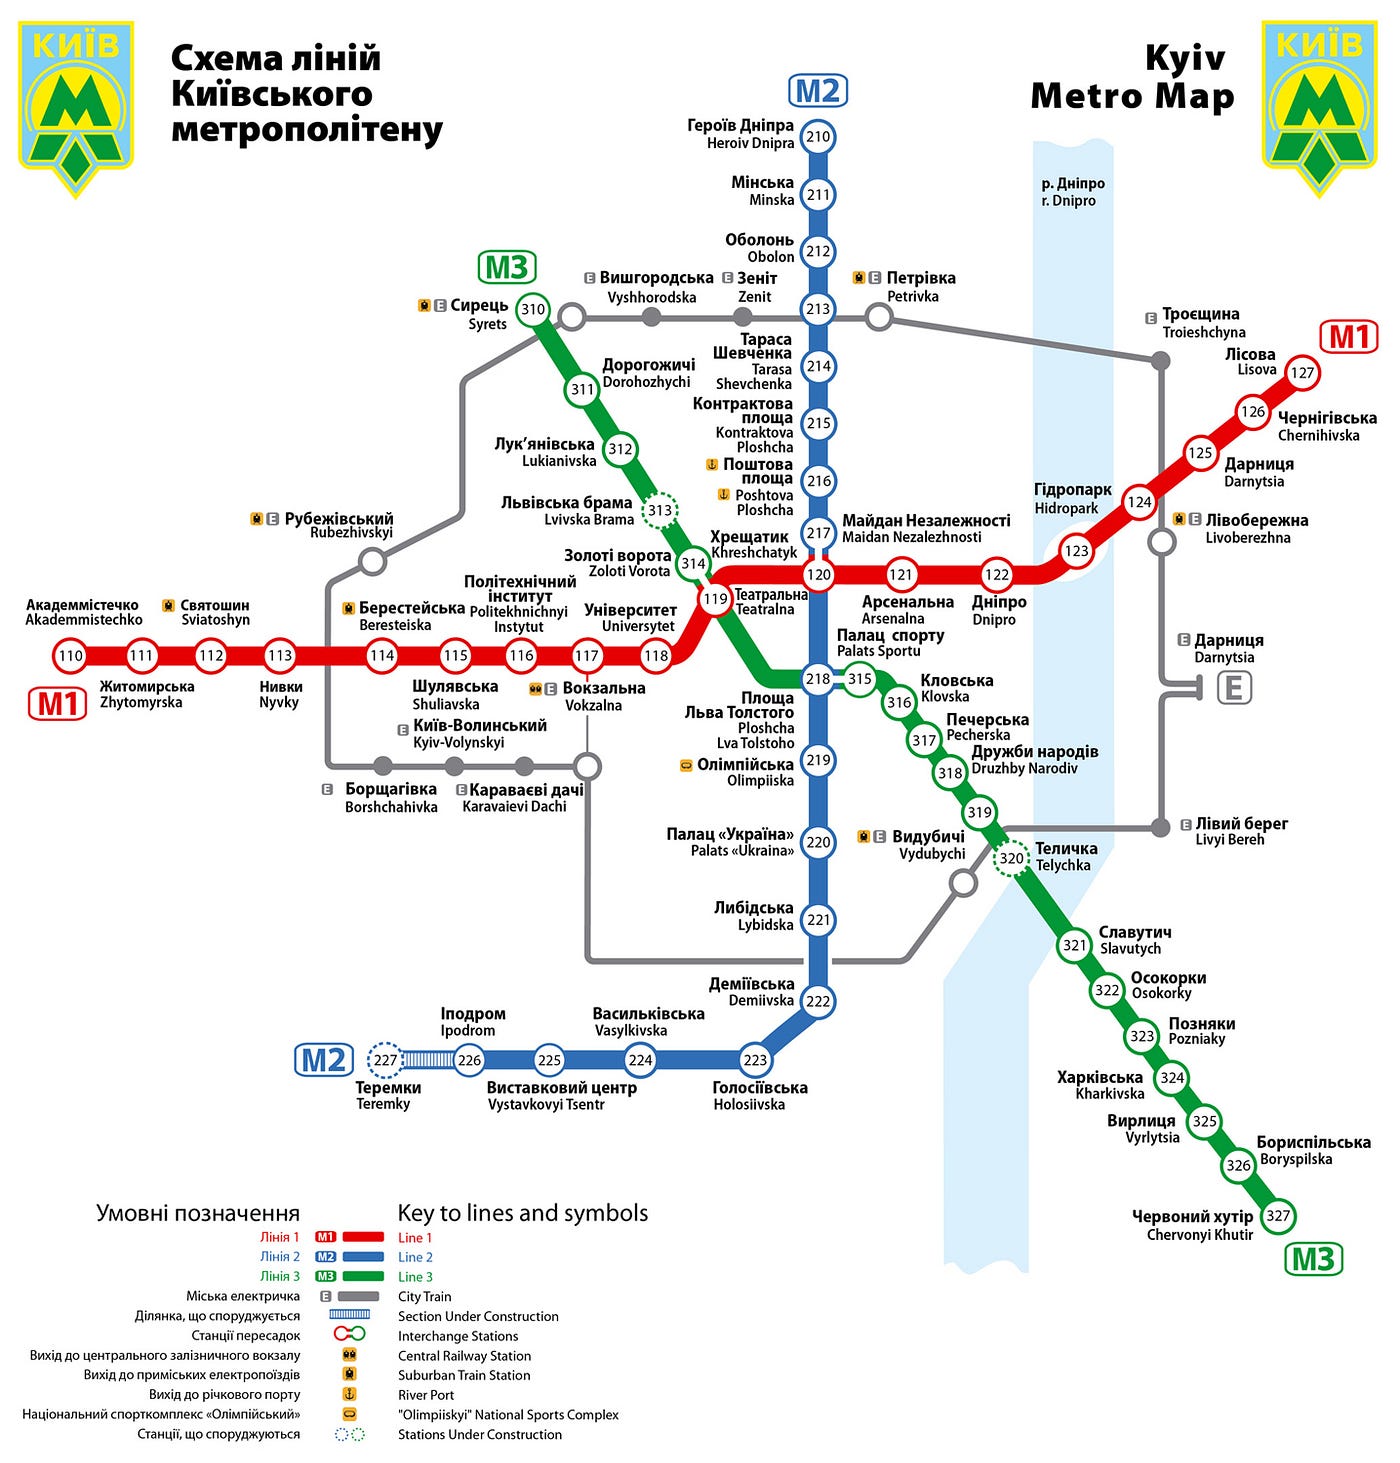 Kiev Metro Map. 52 metro stations, 70 kilometers — this… | by Kate  Dobromishev | Medium